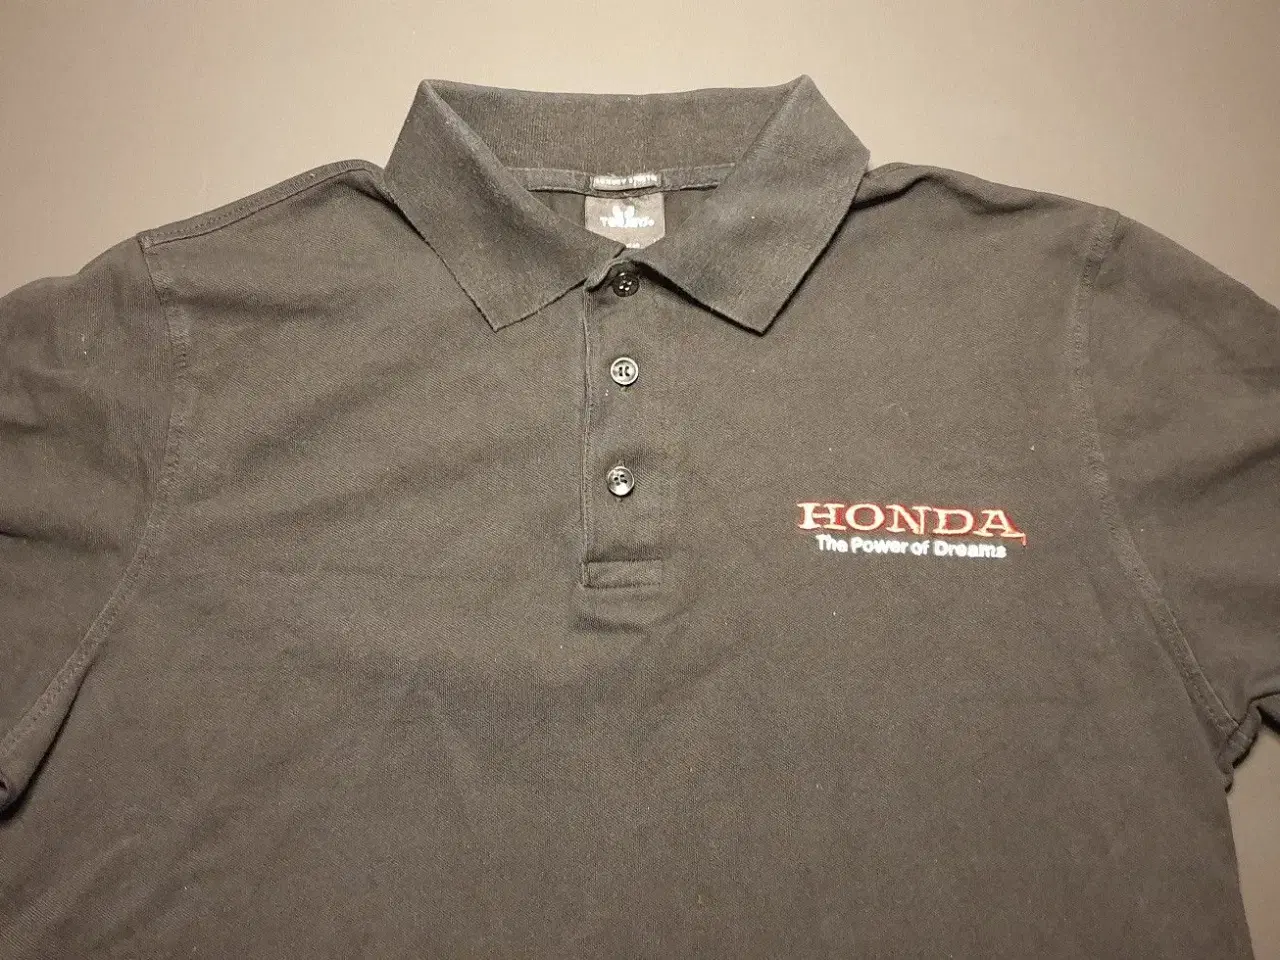 Billede 1 - 6 stk. Honda t-shirts + 3 stk. pullovers